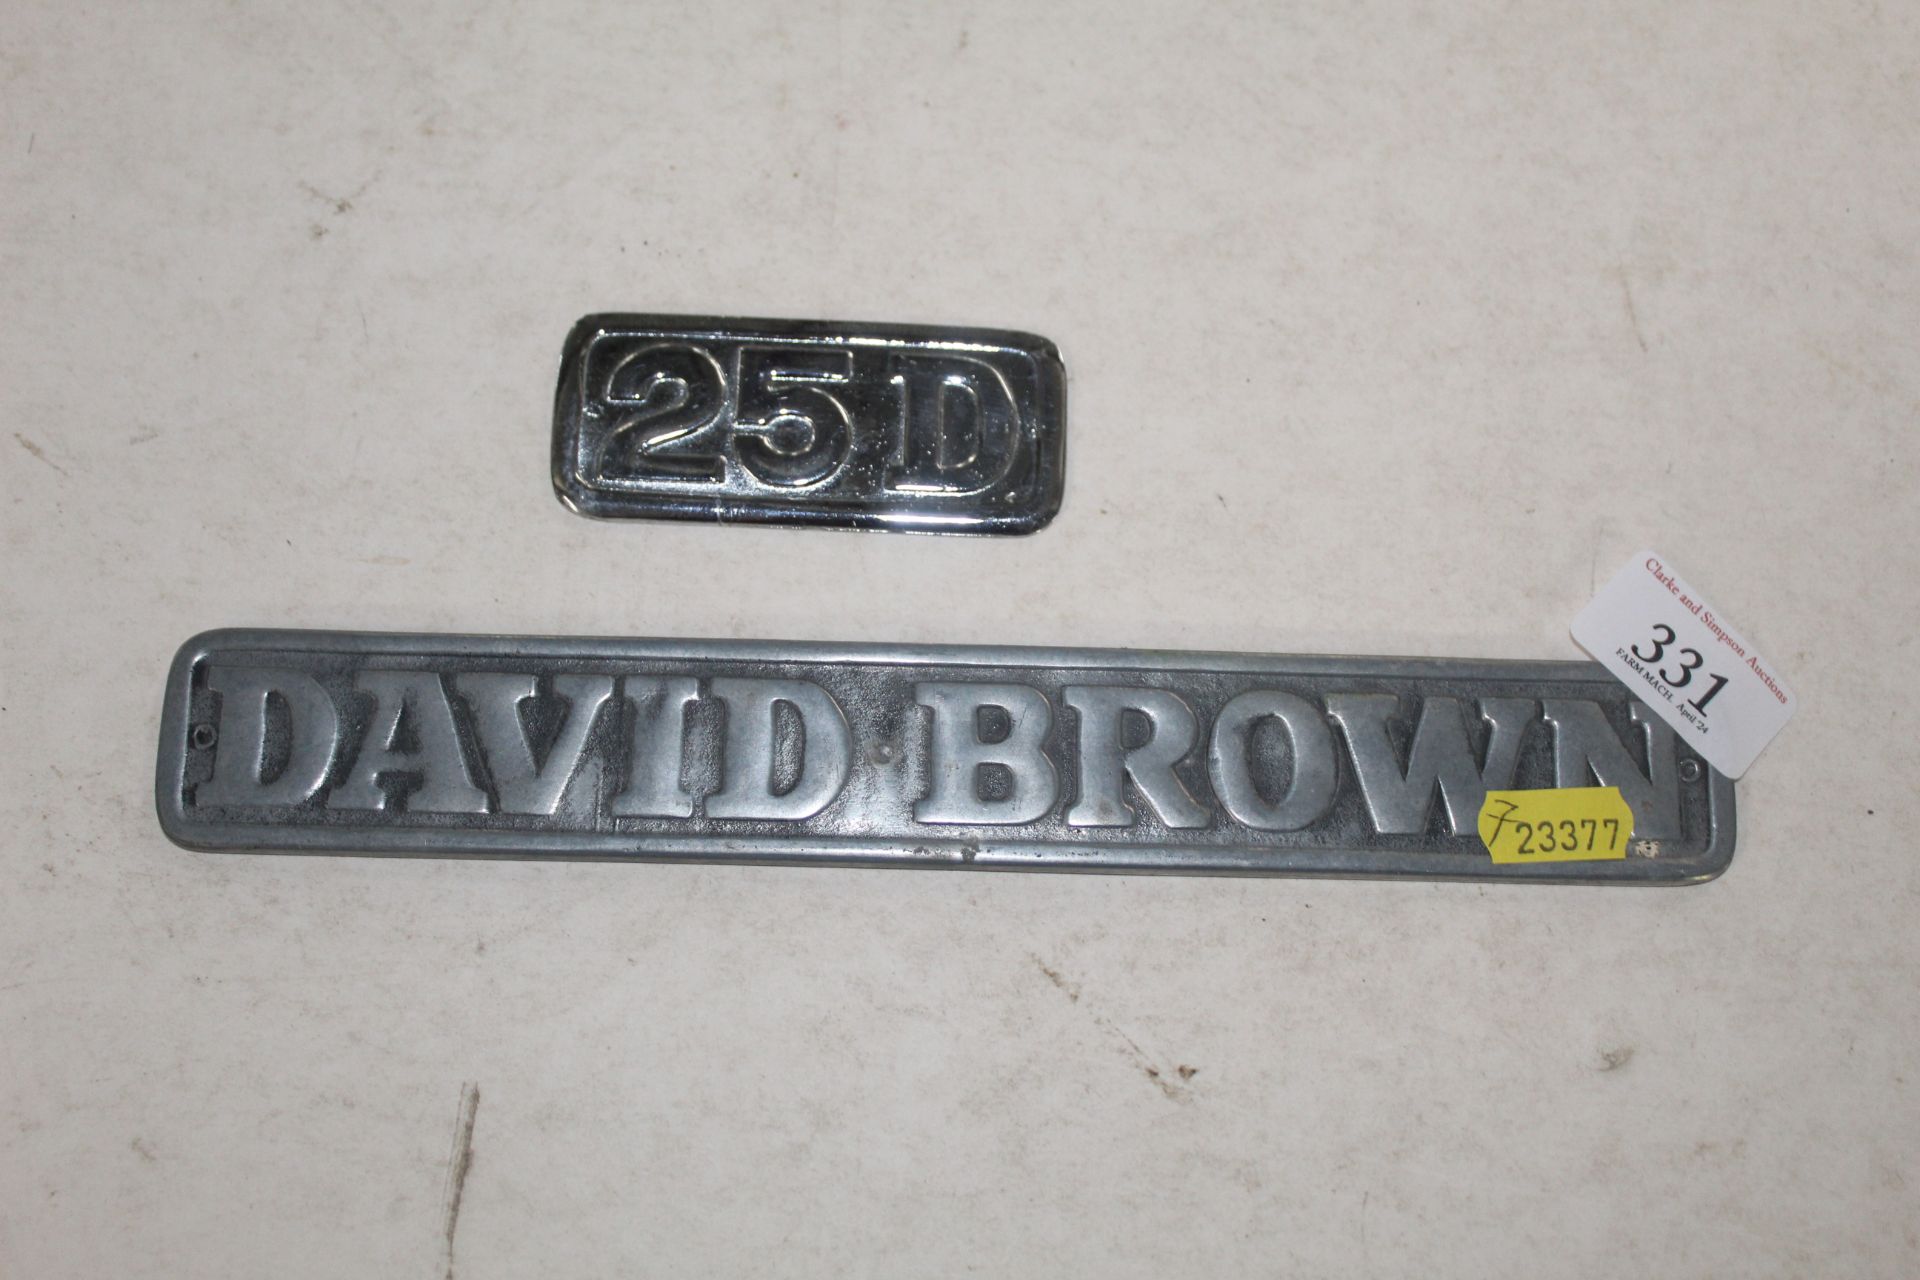 David Brown 25D Tractor Badges.